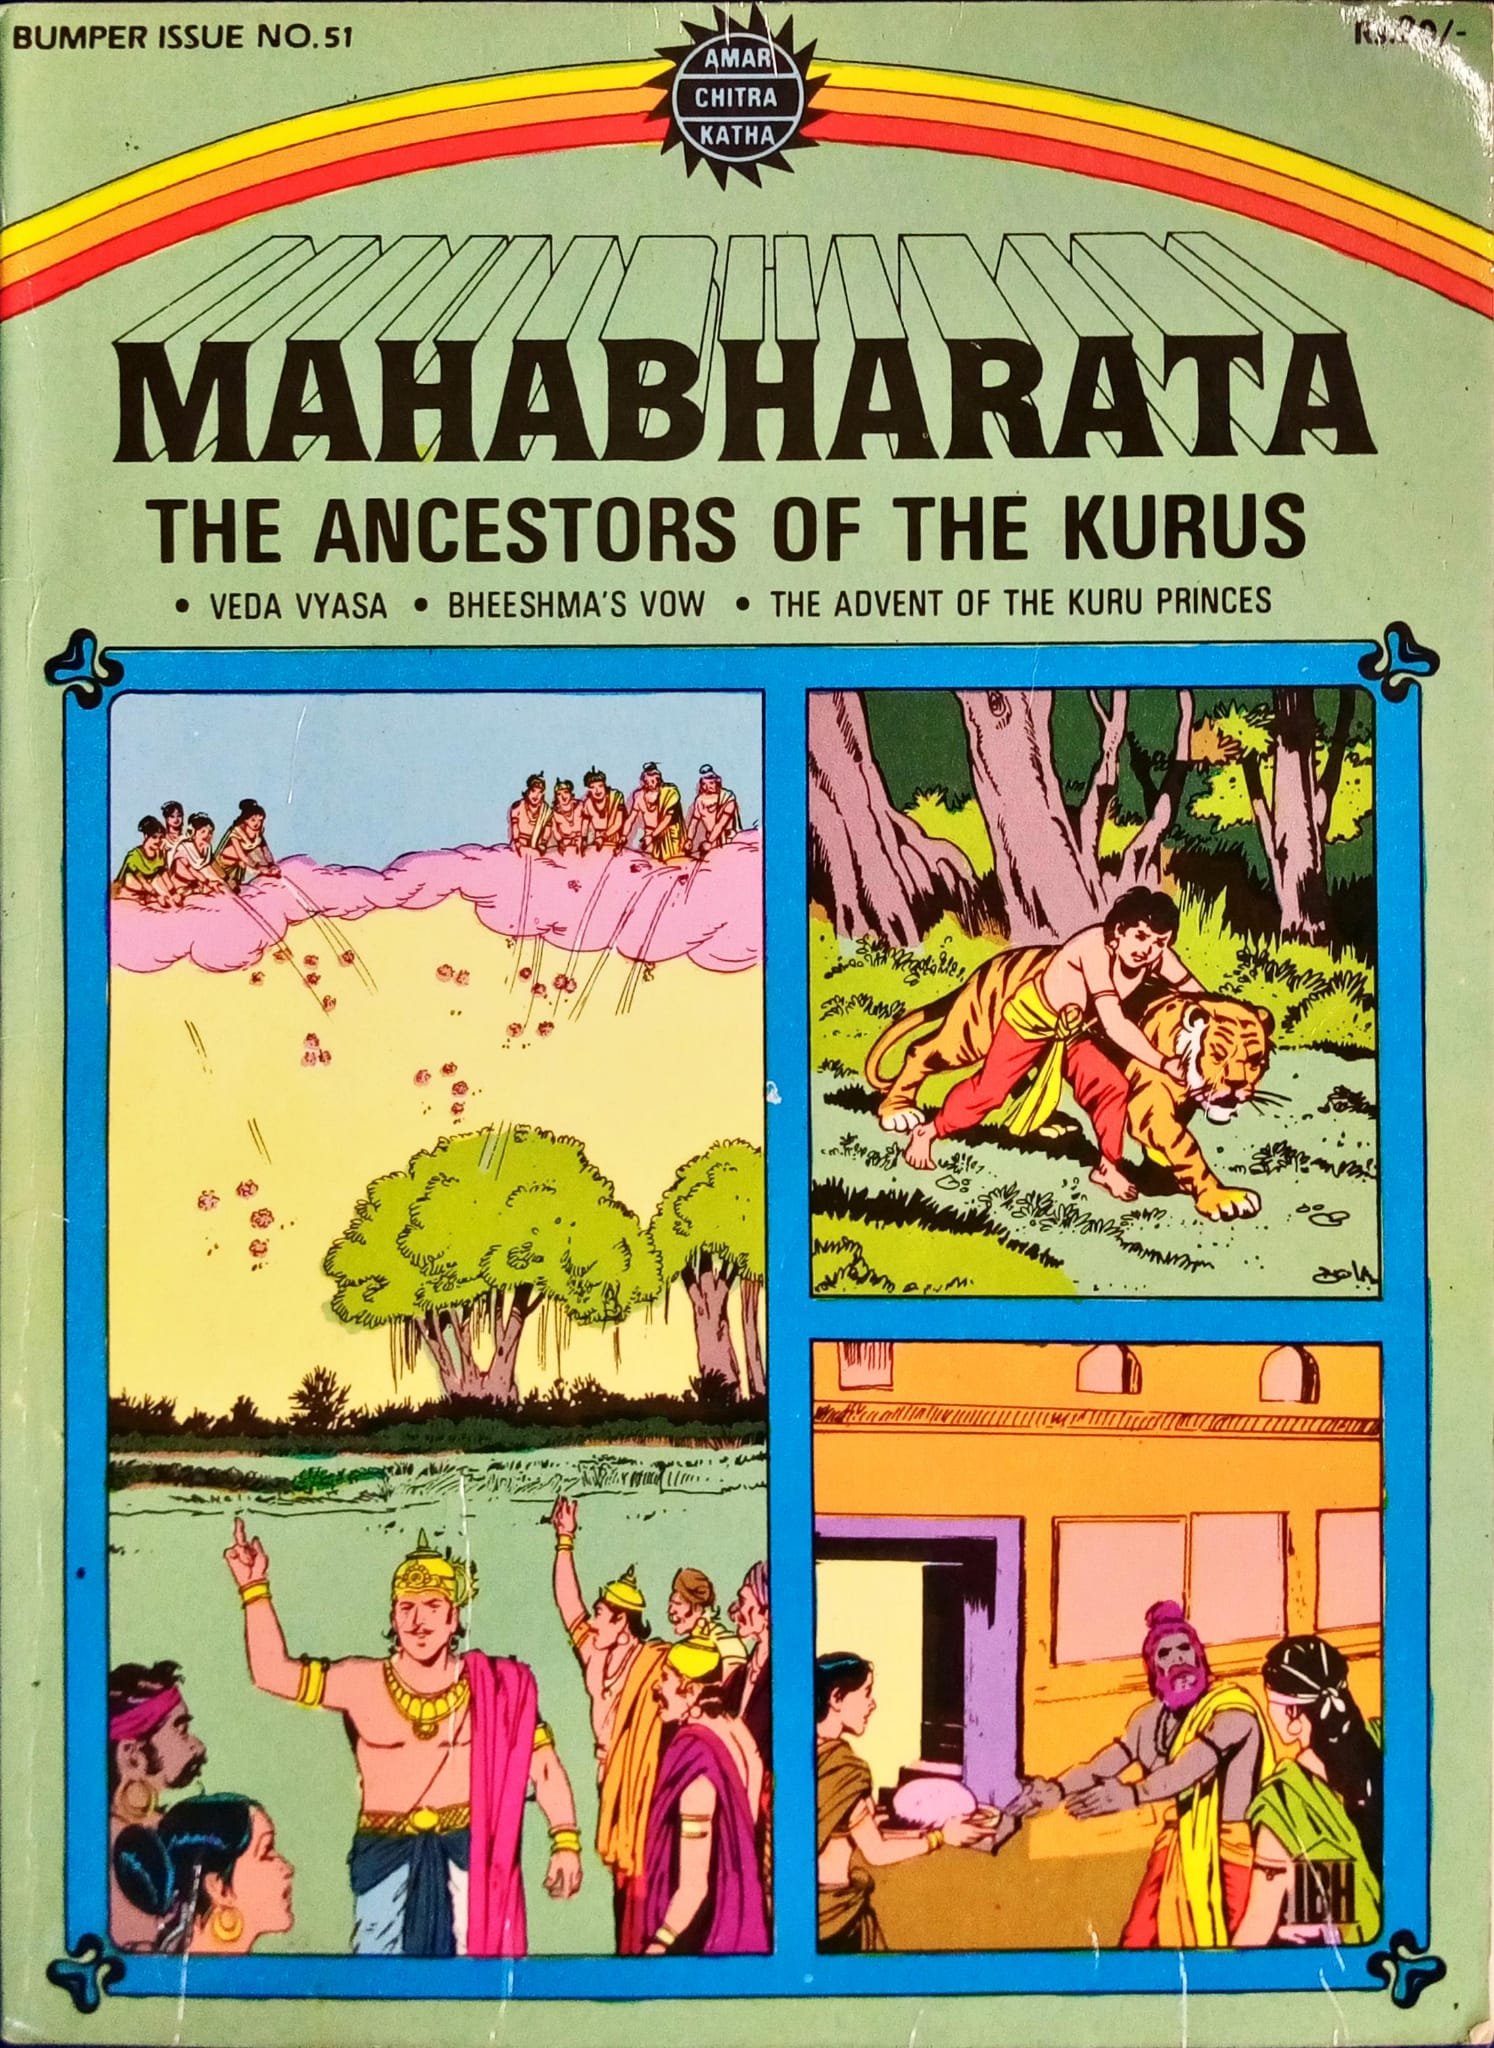 Mahabharata The Ancestors of the Kurus